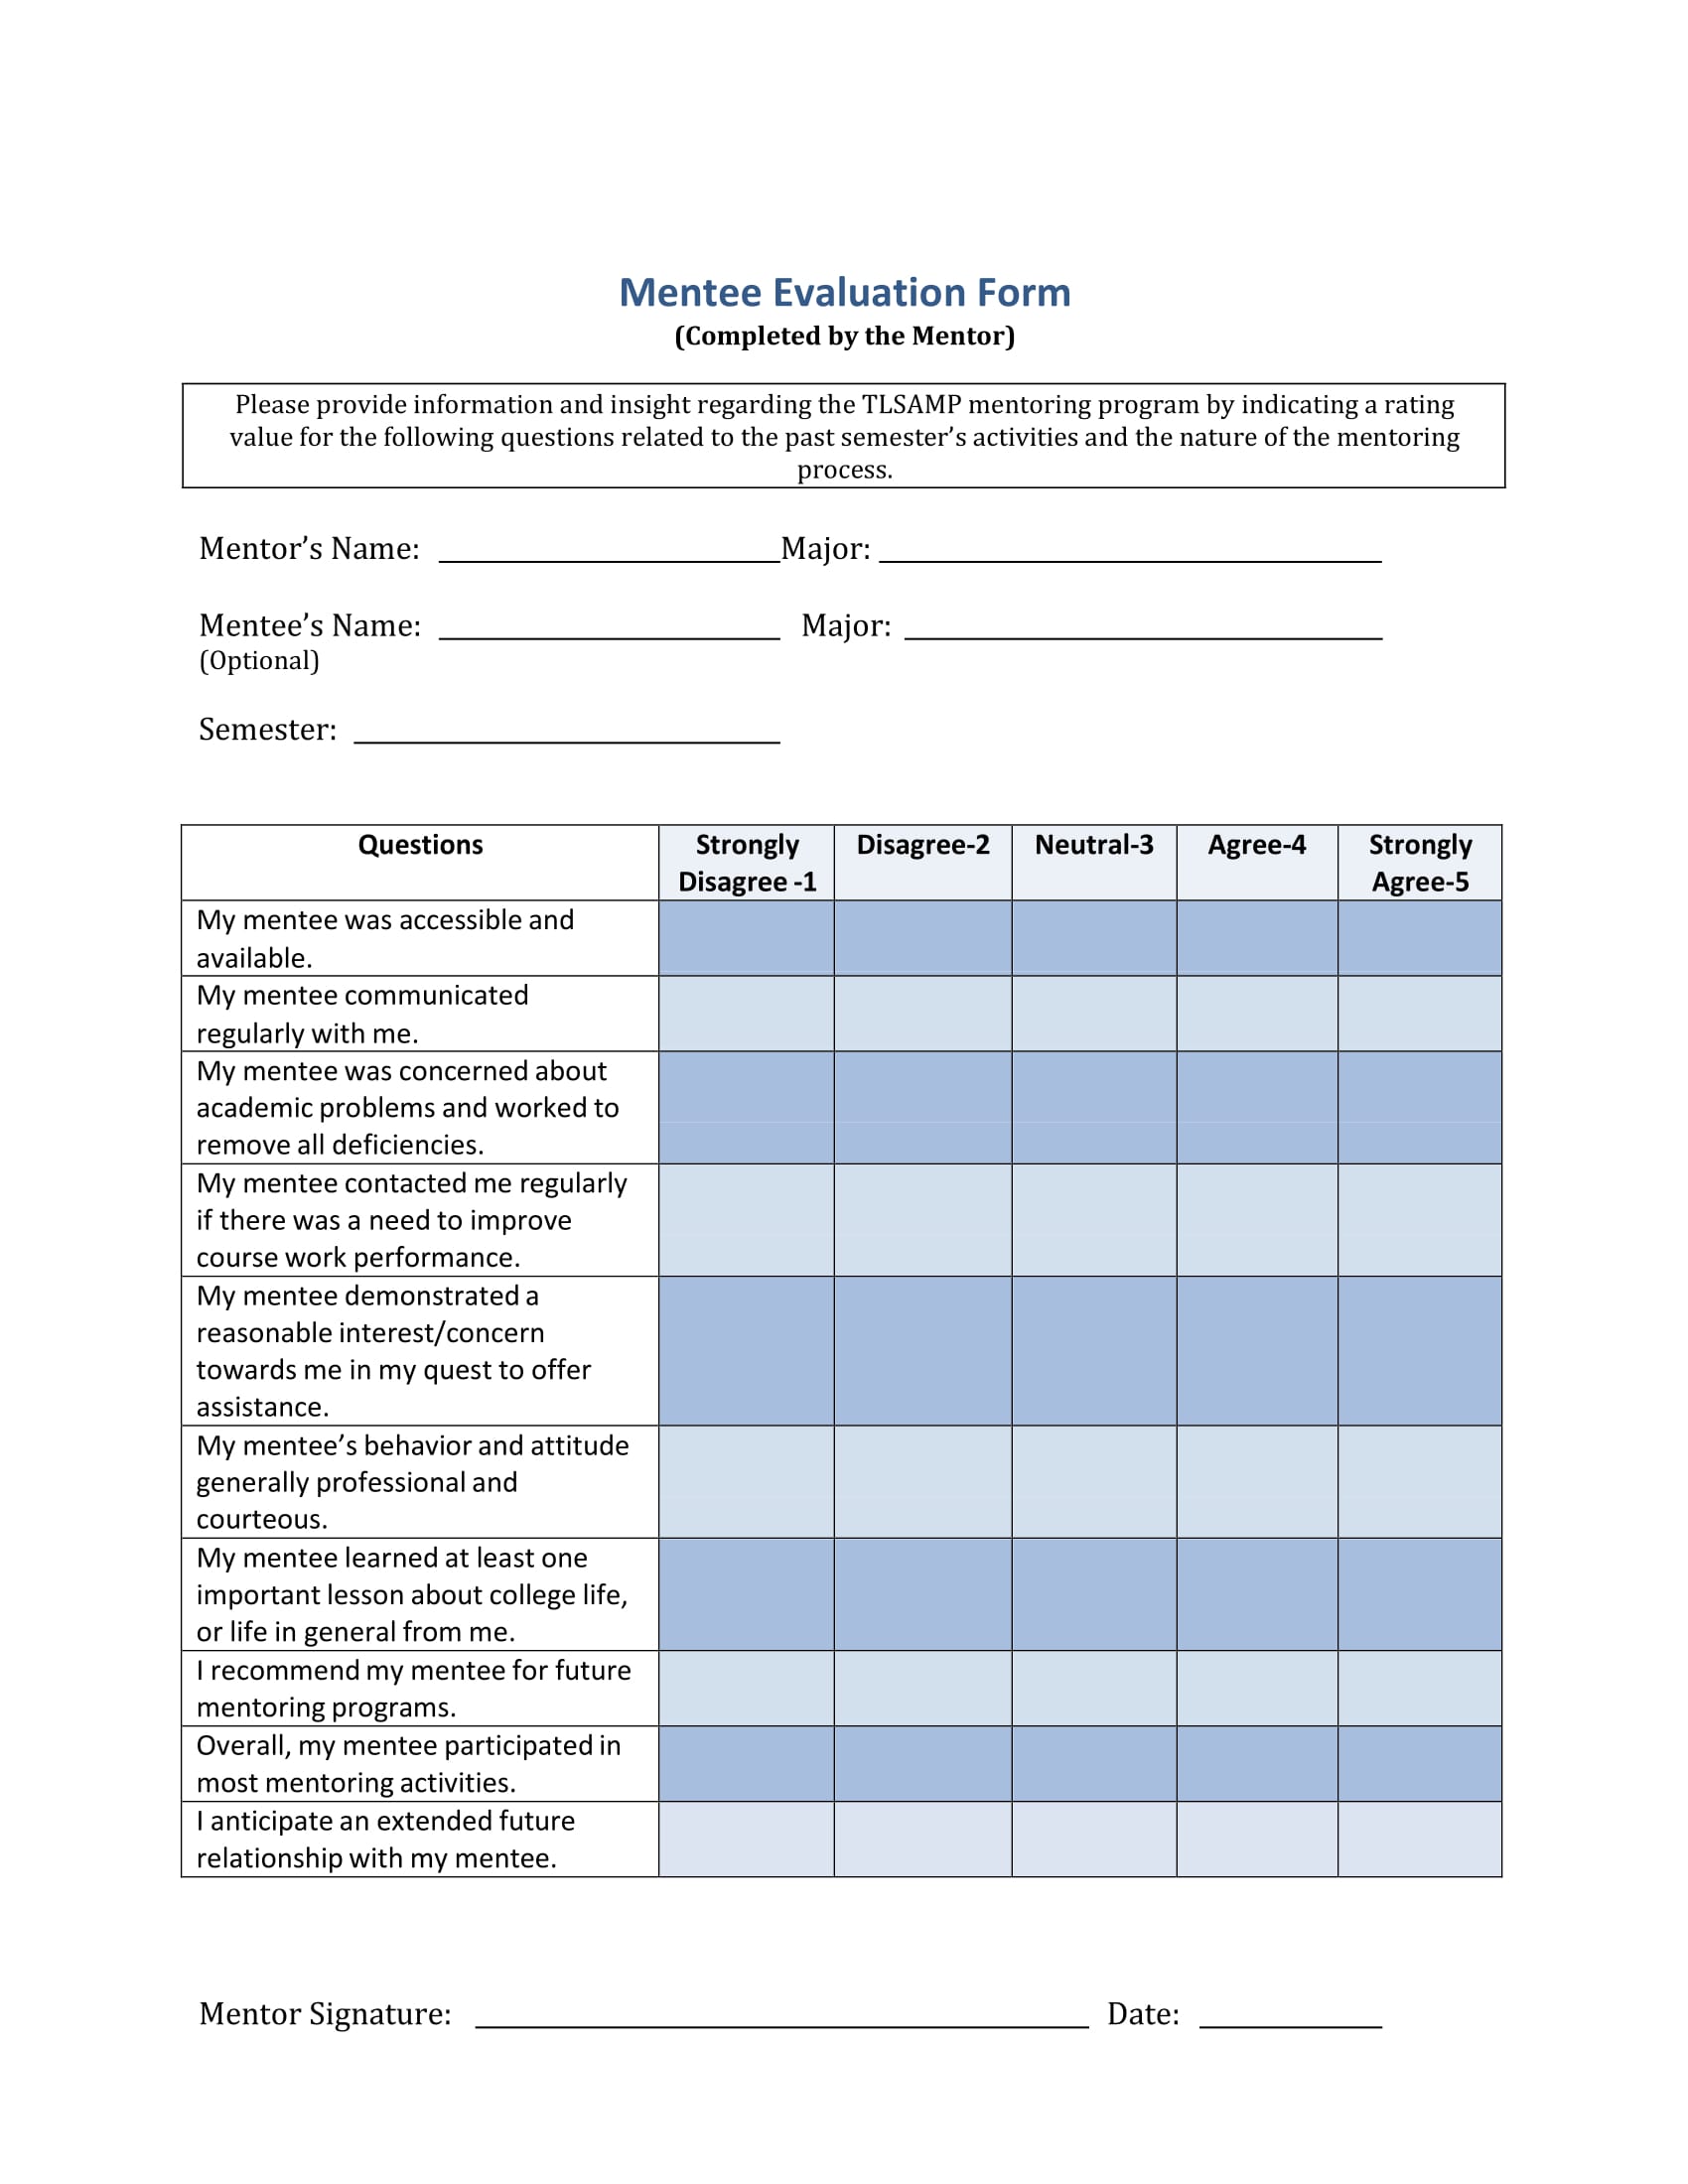 mentee evaluation form sample 1